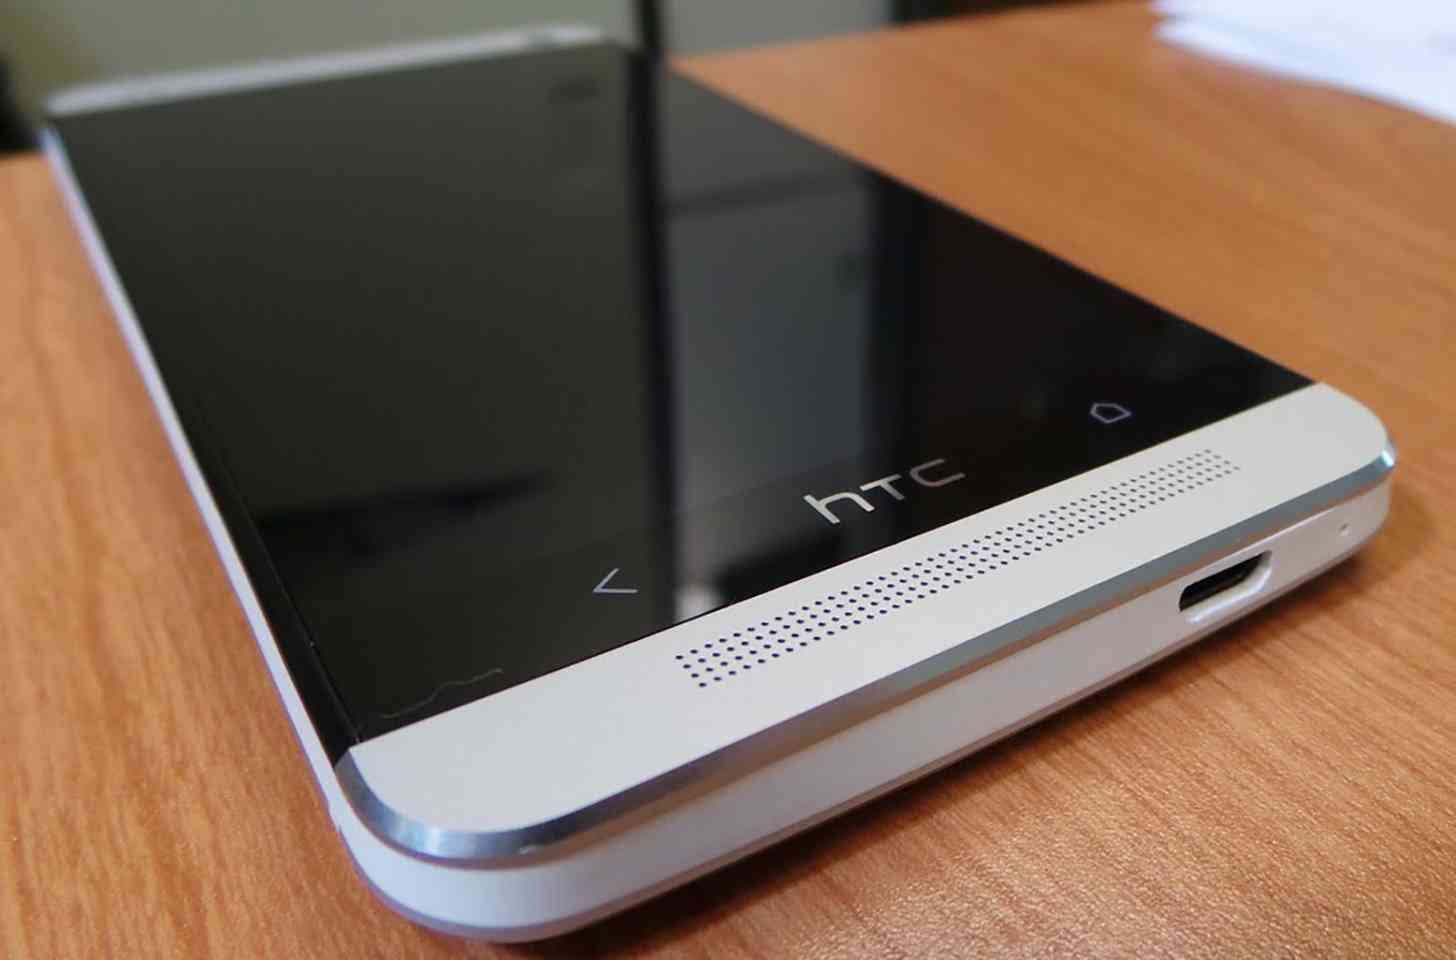 HTC M7